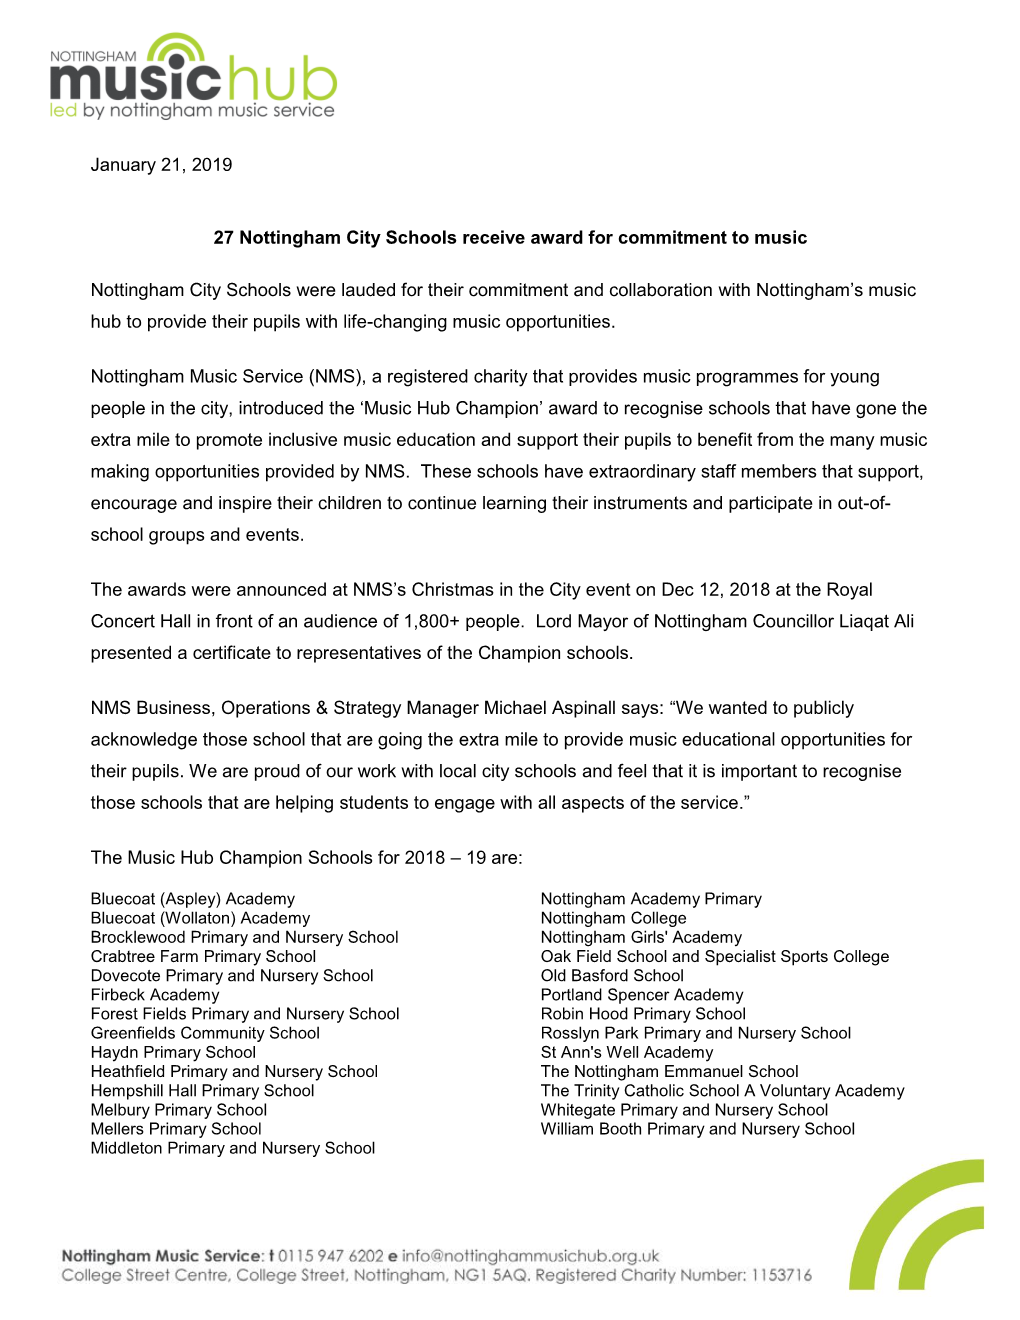 January 21, 2019 27 Nottingham City Schools Receive Award For